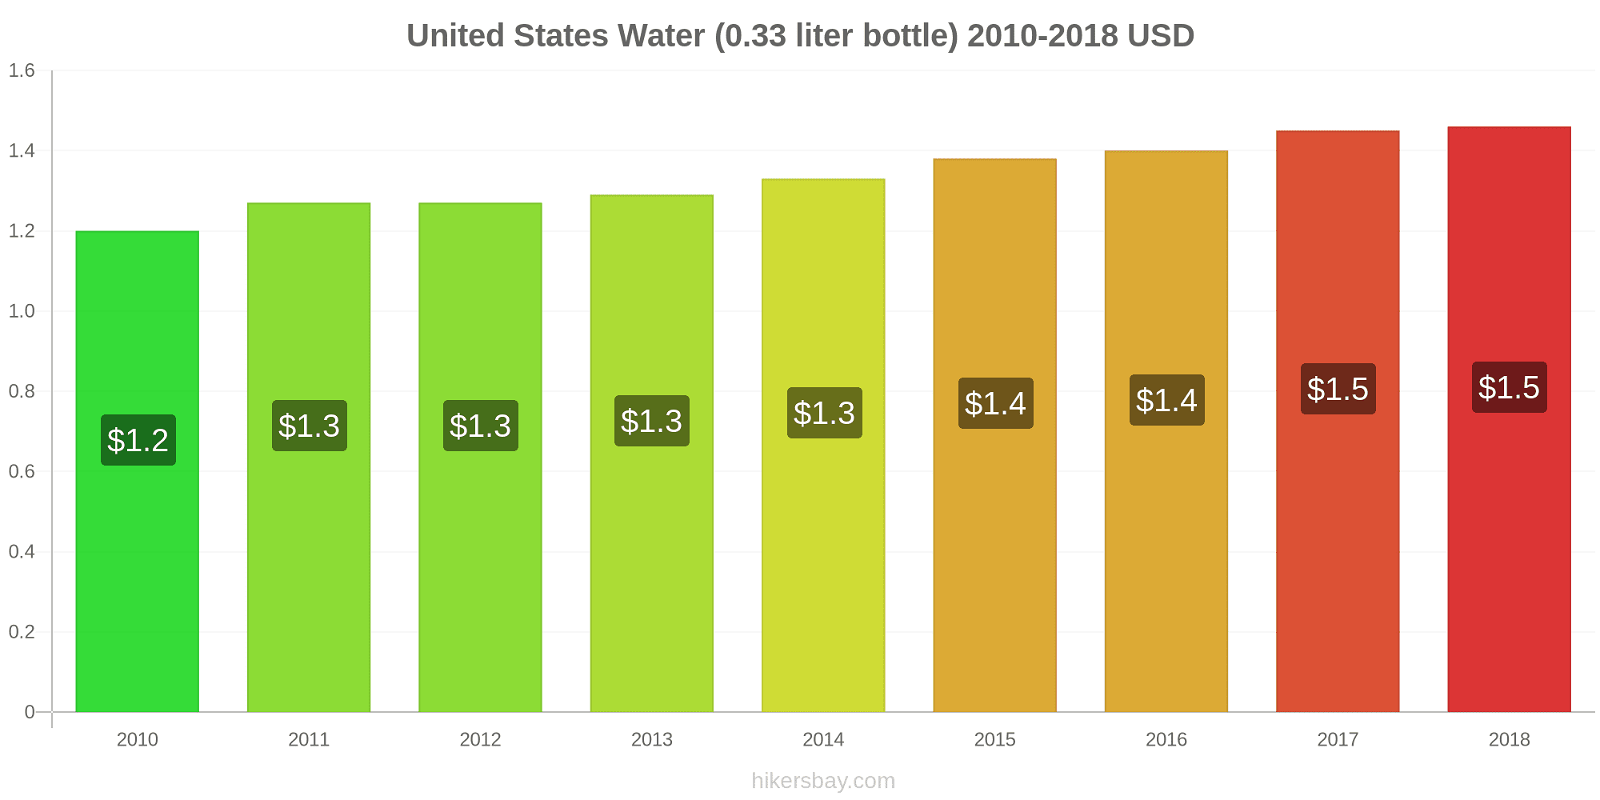 United States price changes Water (0.33 liter bottle) hikersbay.com